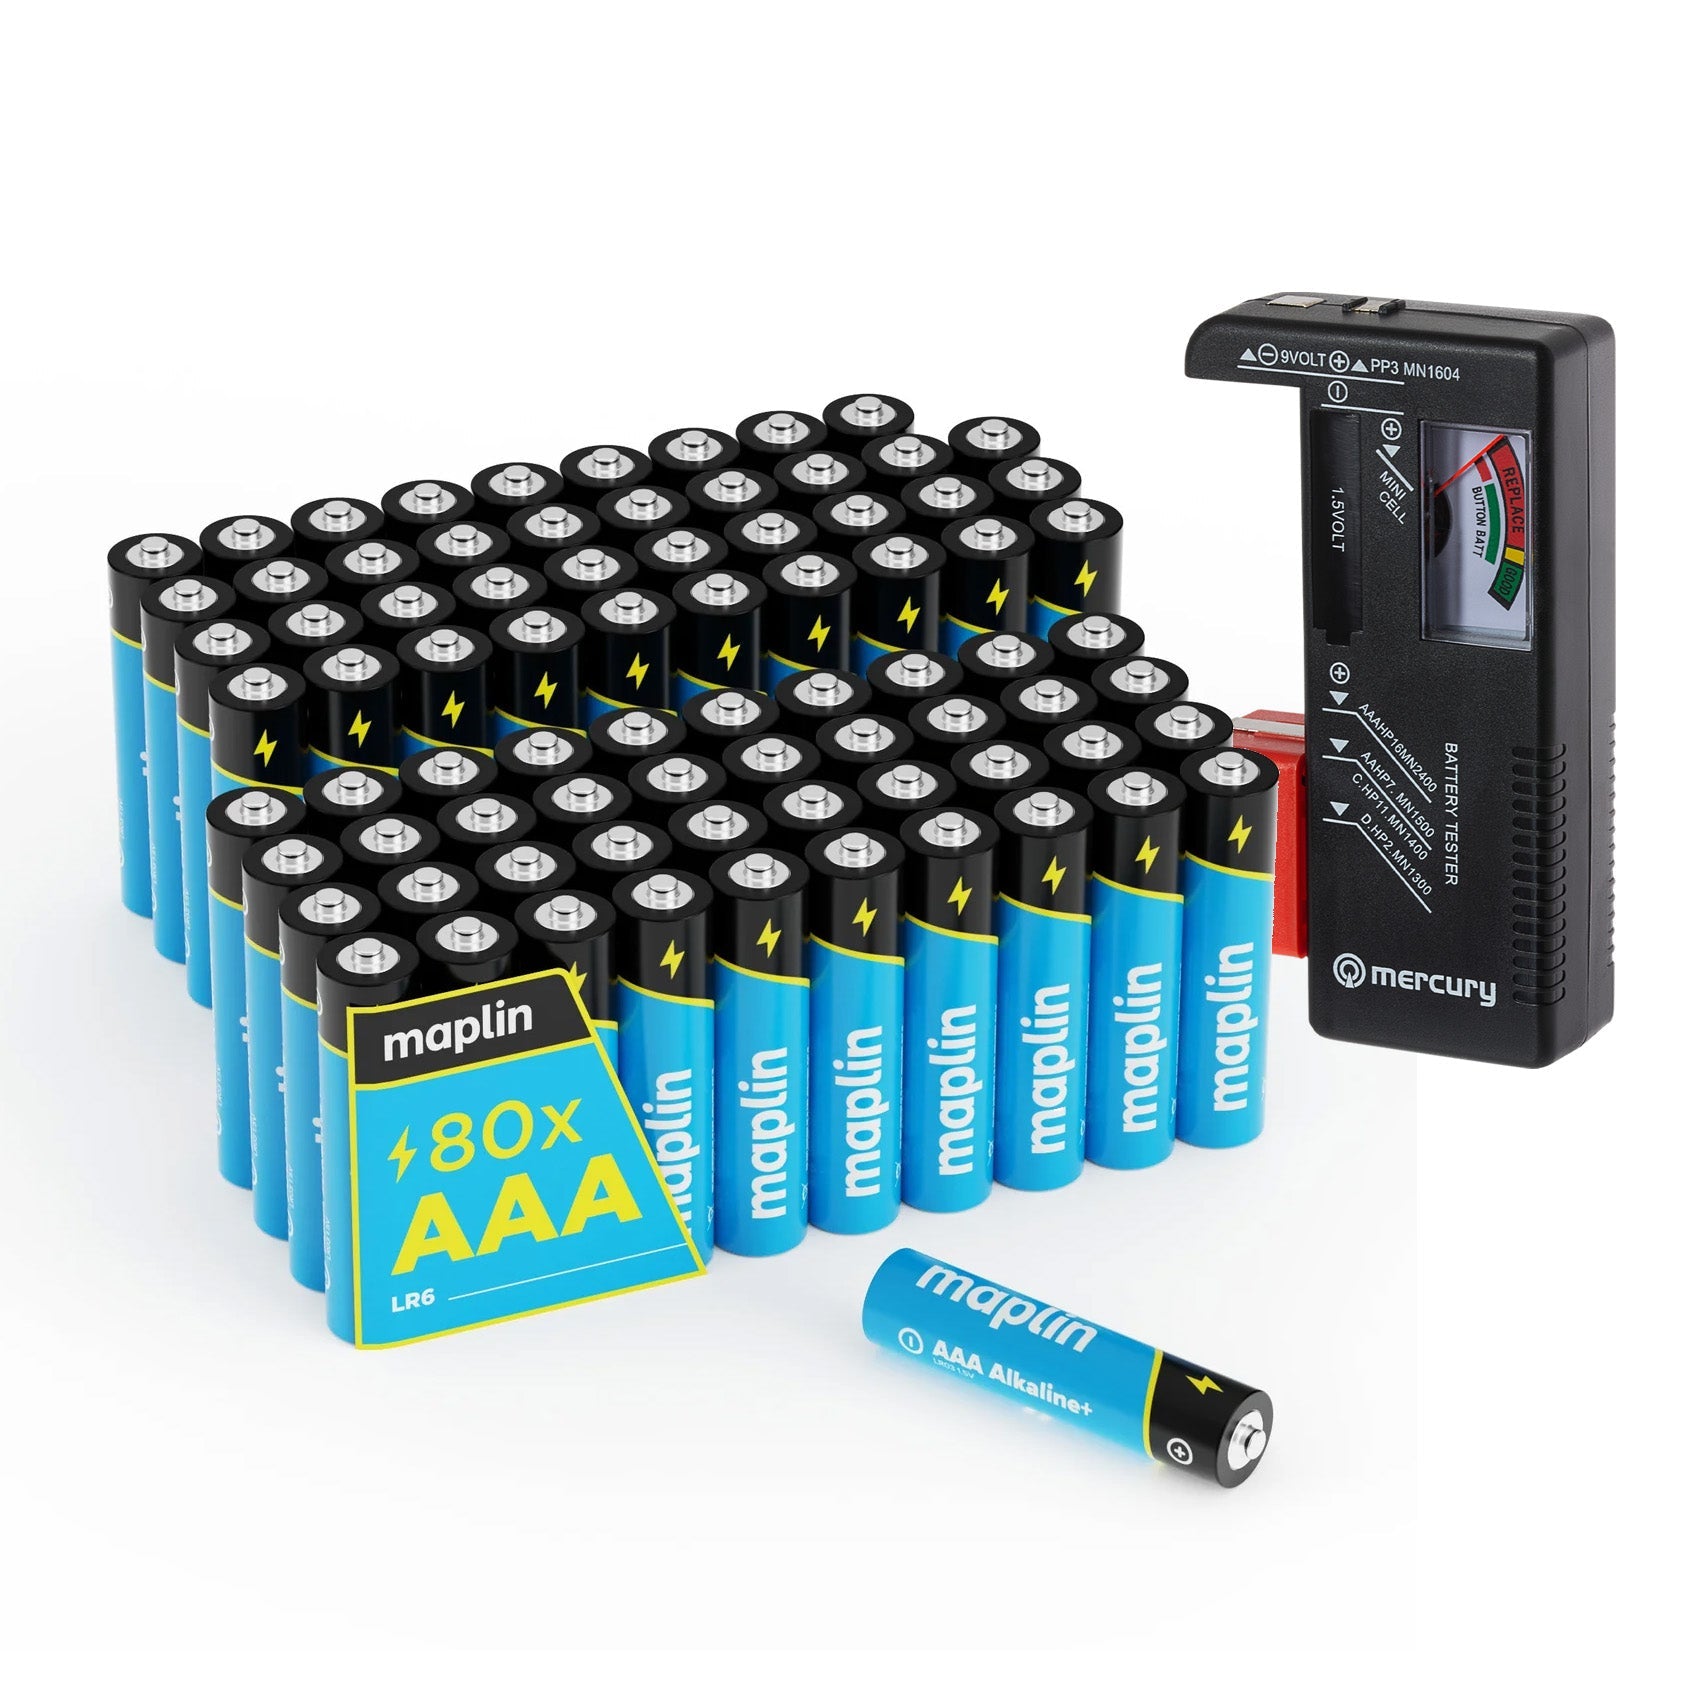 Maplin 80x AAA LR03 7 Year Shelf Life 1.5V High Performance Alkaline Batteries with Universal Battery Tester